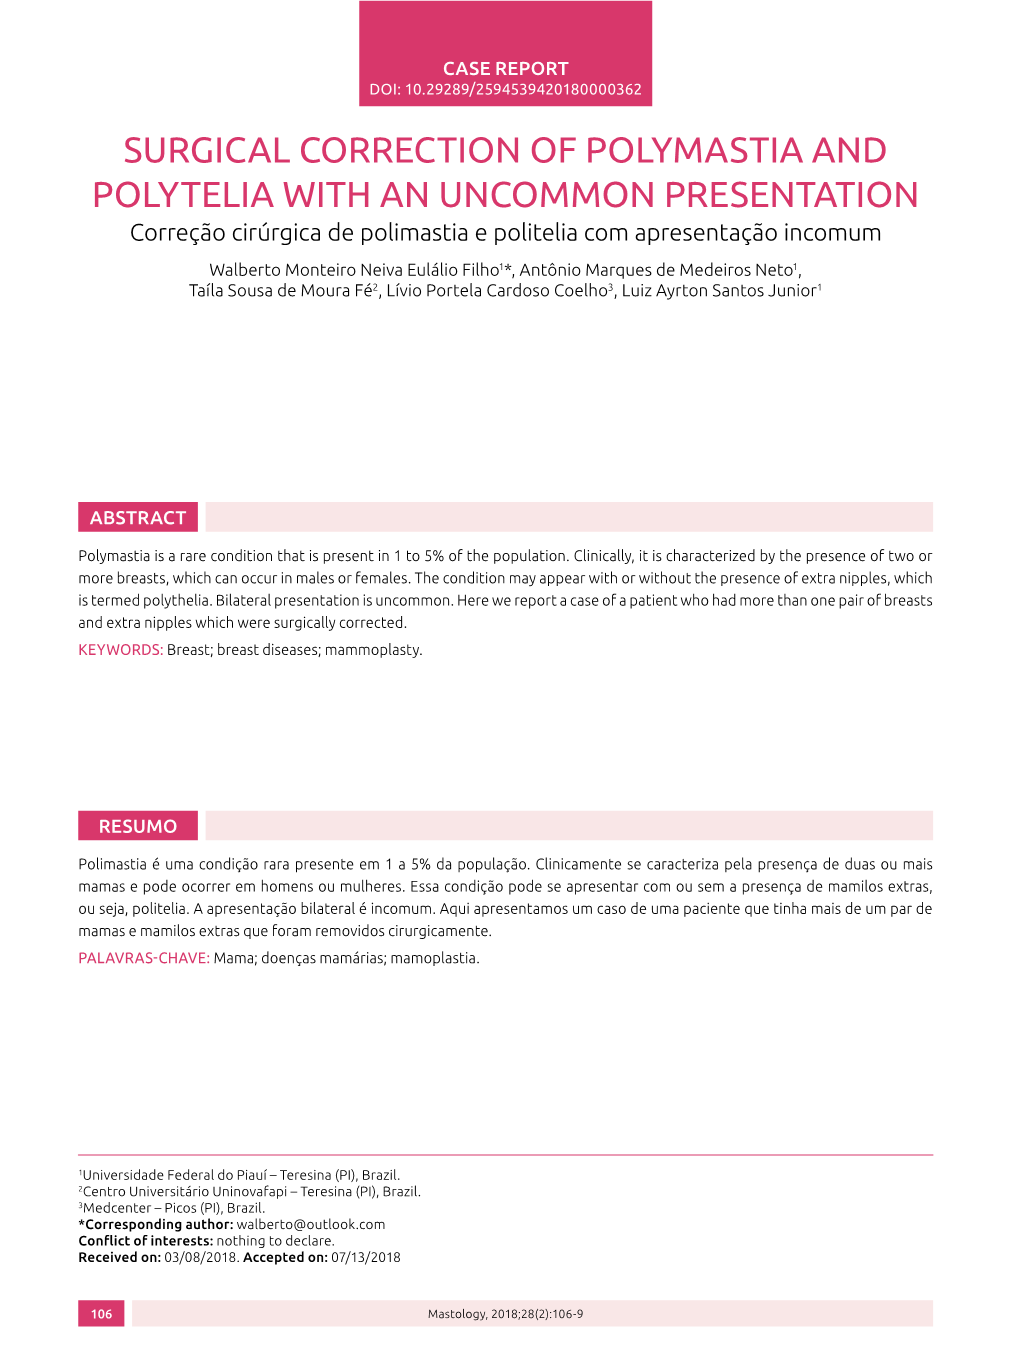 Surgical Correction of Polymastia and Polytelia with an Uncommon